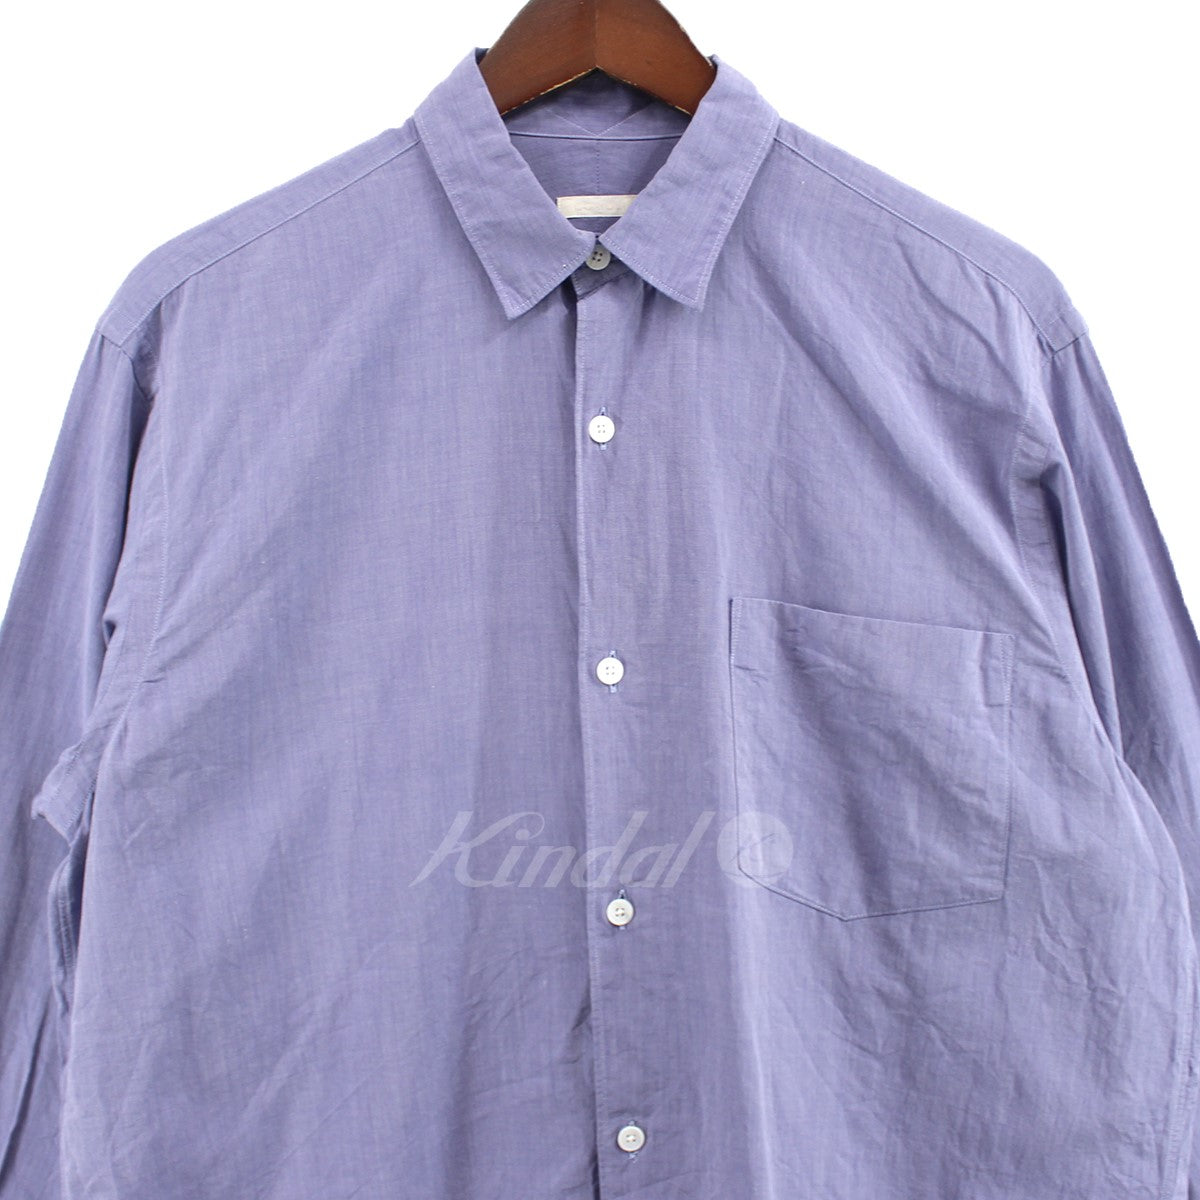 COMOLI(コモリ) コモリシャツ レギュラーカラーシャツ K01-02001 